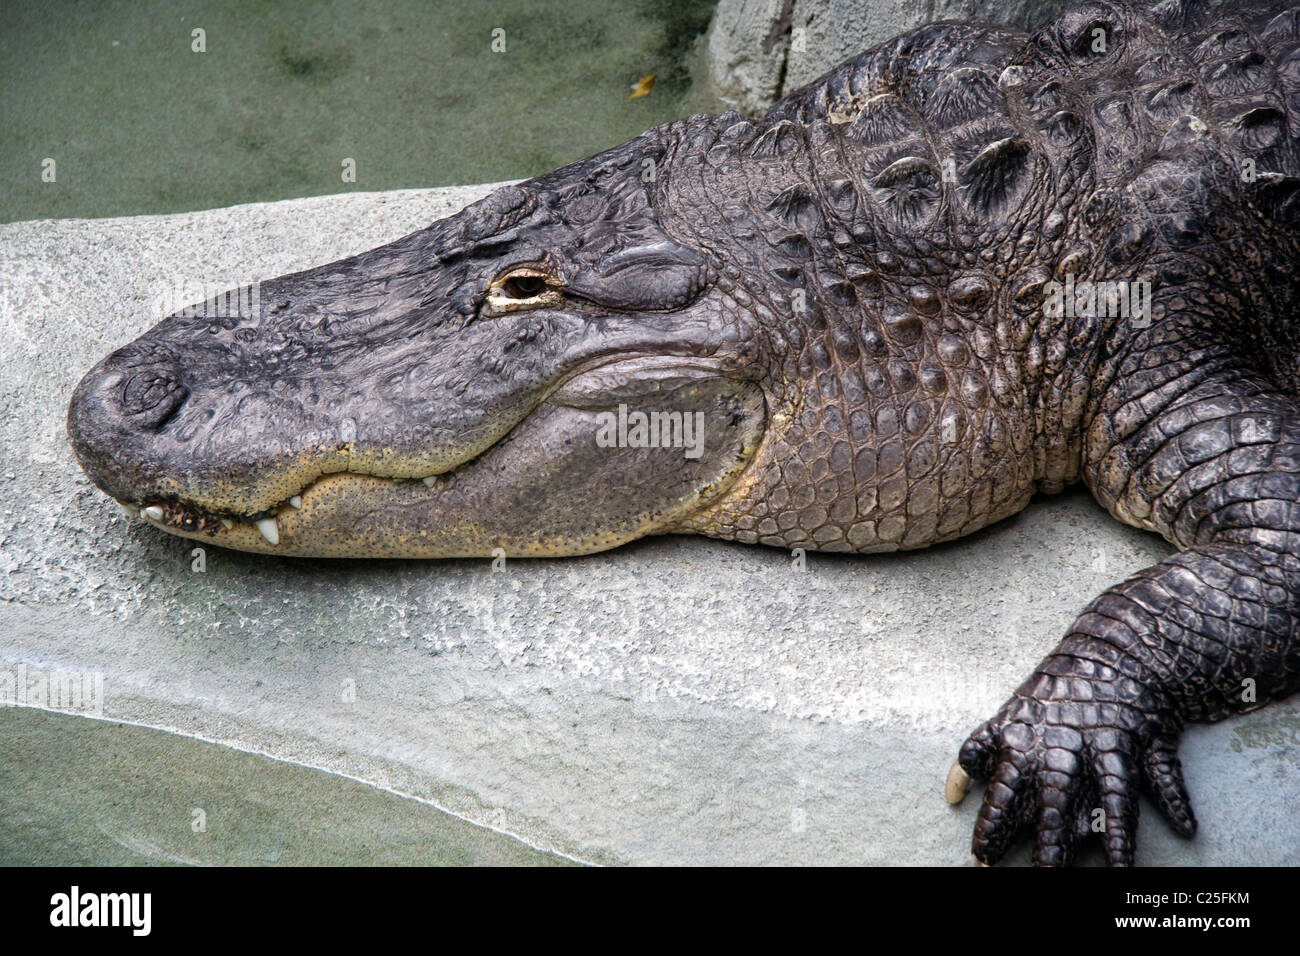 The American alligator (Alligator mississippiensis), Stock Photo